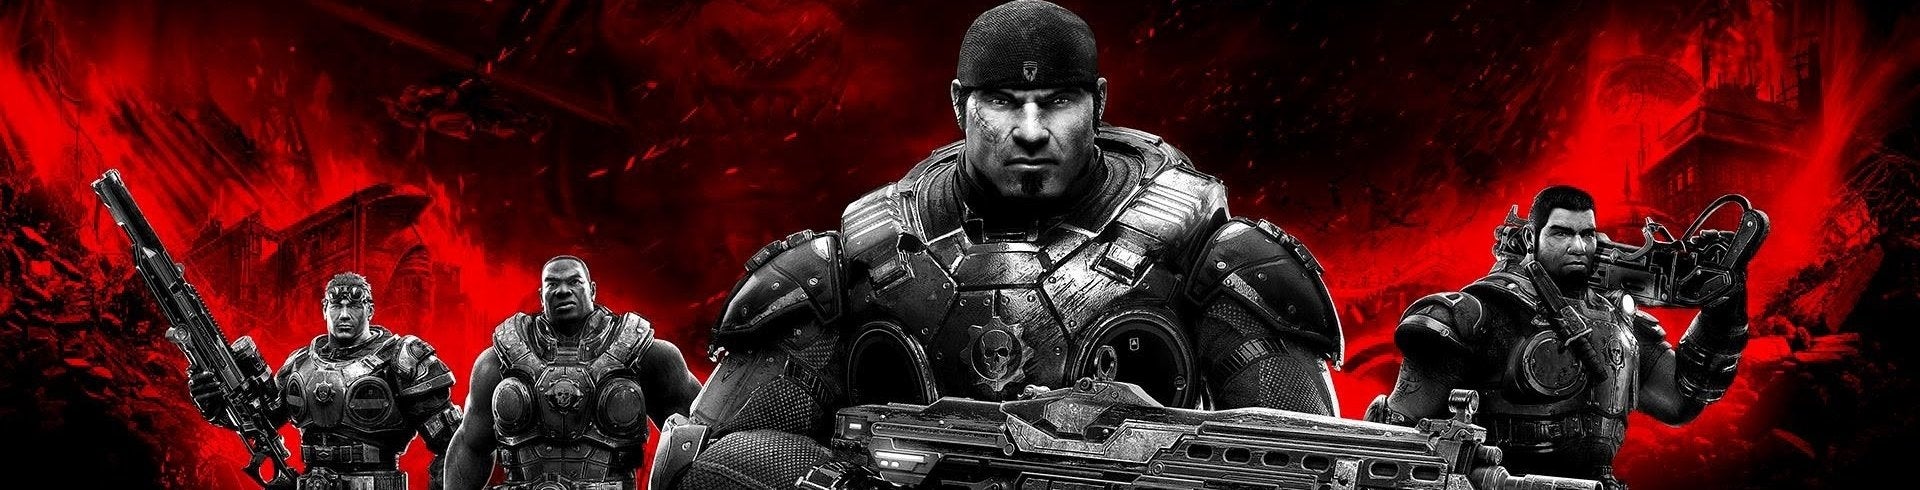 Obrazki dla Gears of War: Ultimate Edition - Recenzja